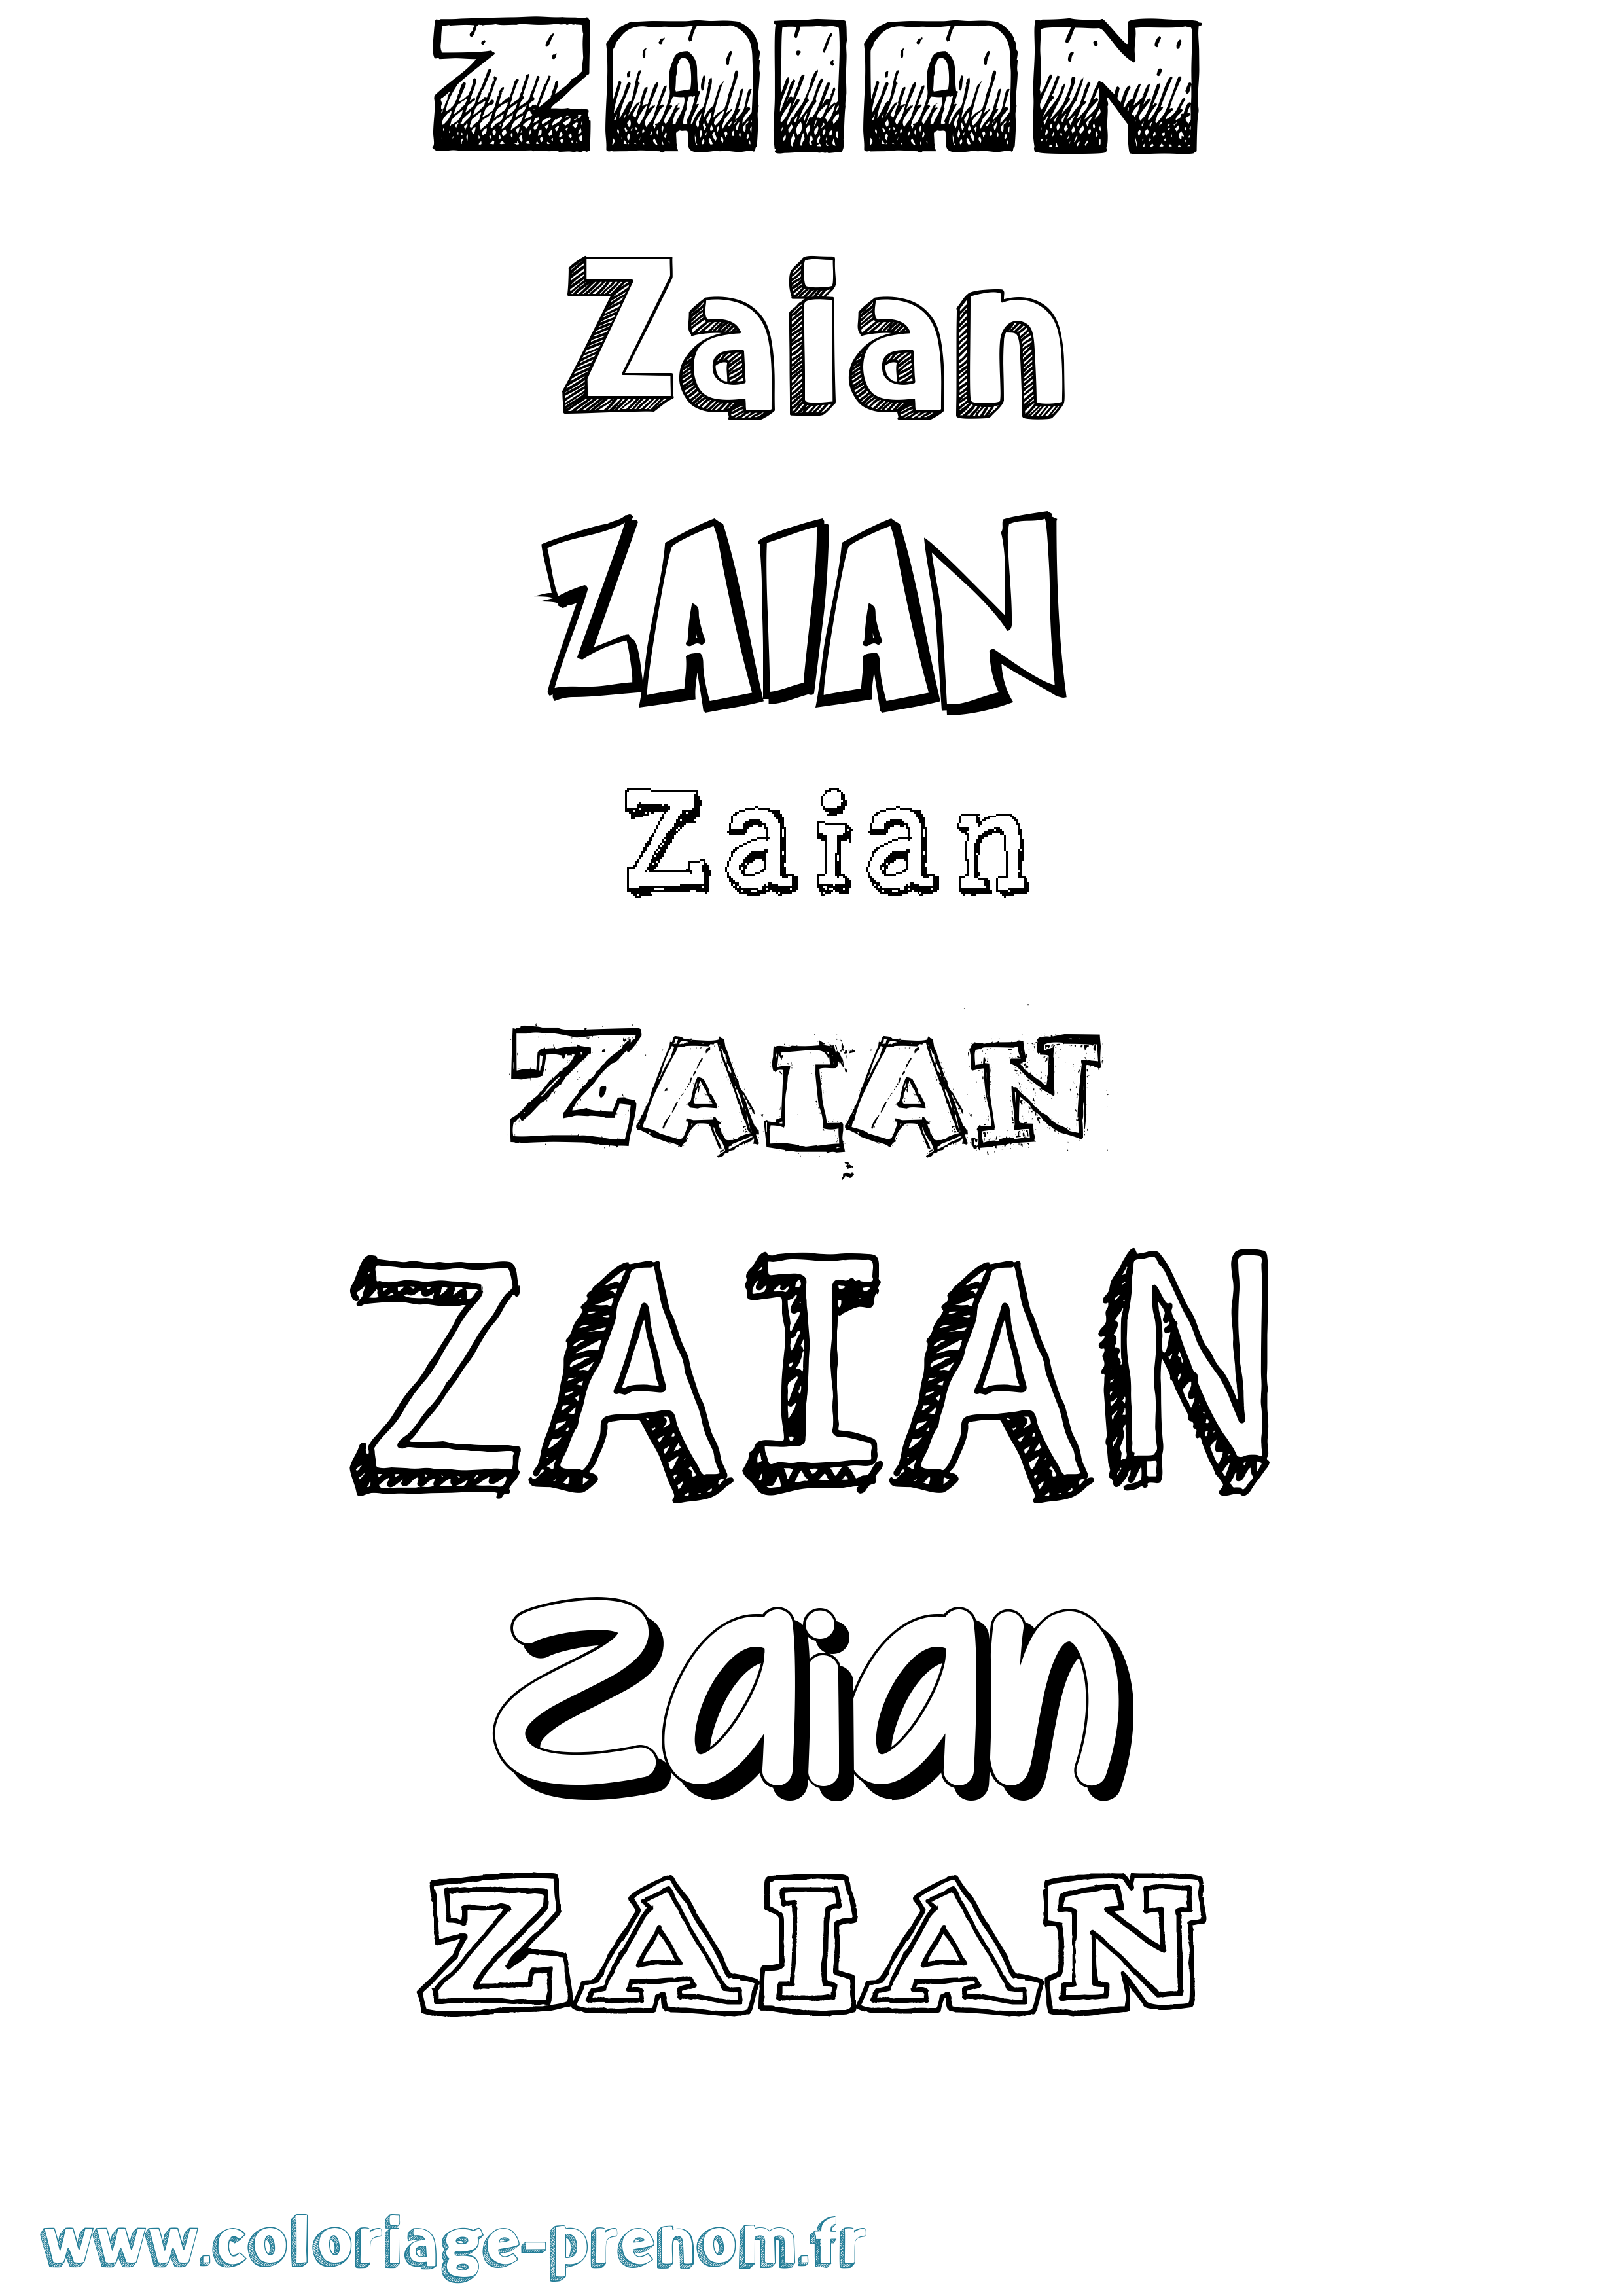 Coloriage prénom Zaian Dessiné